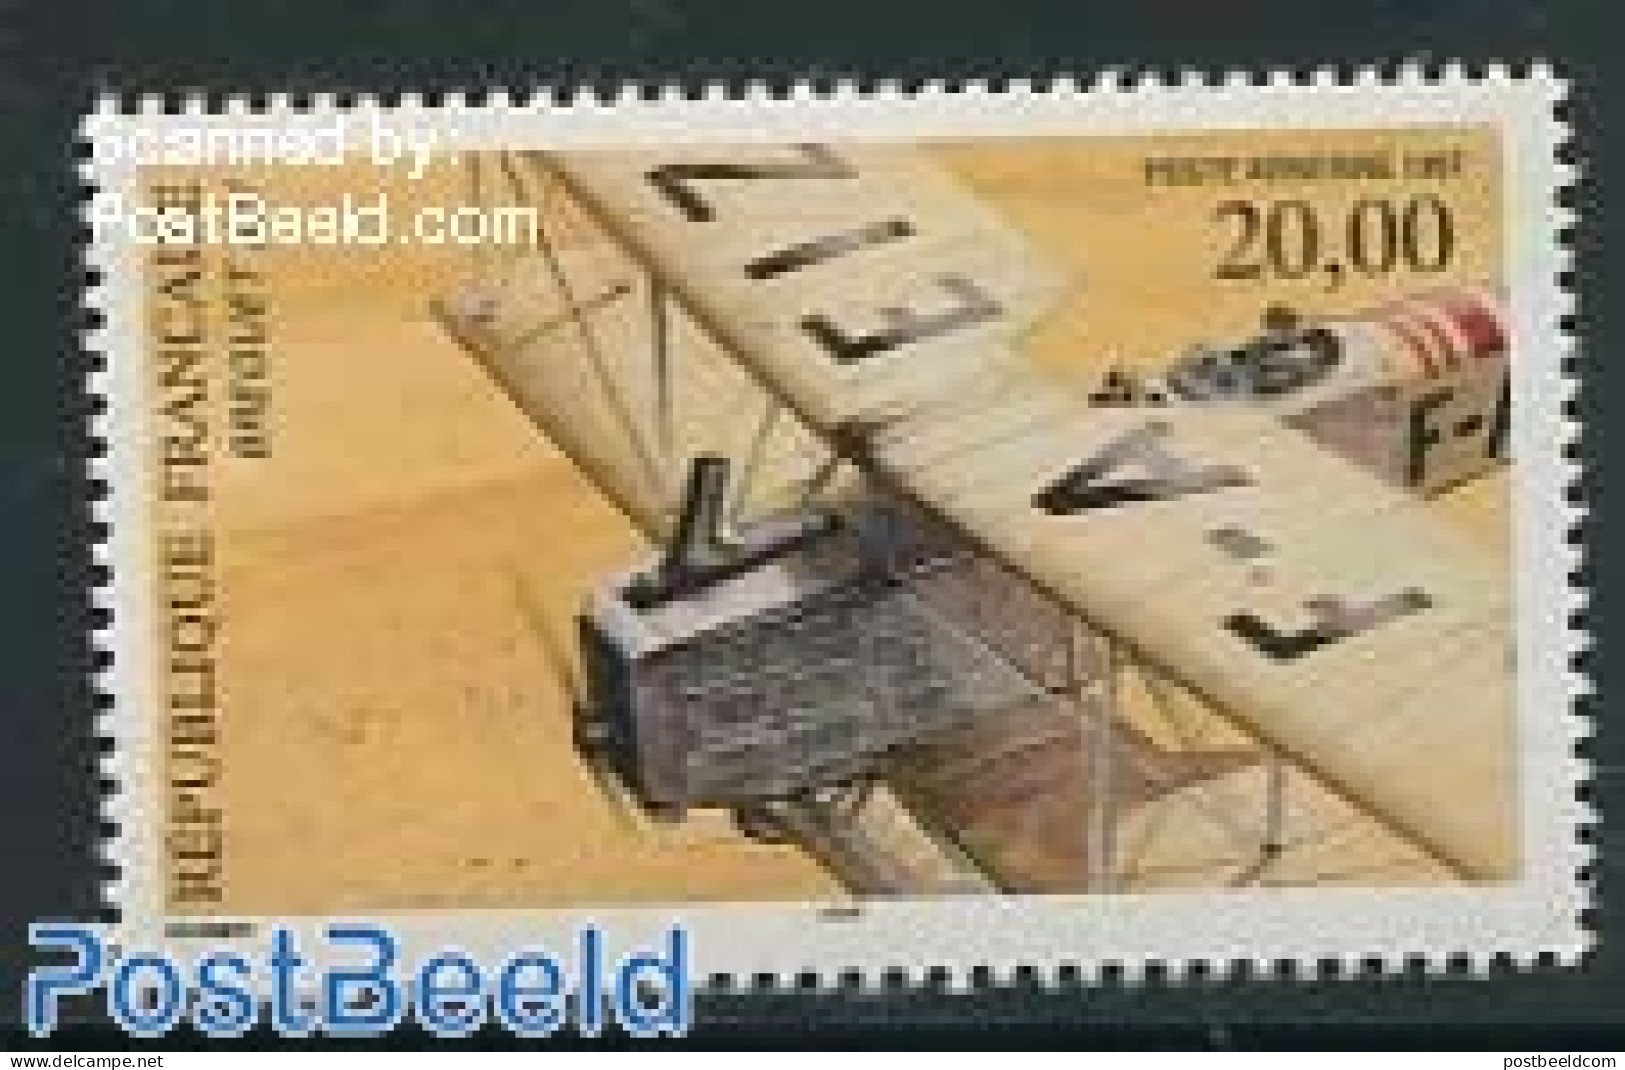 France 1997 Breguet XIV 1v, Perf 13:13,25, Mint NH, Transport - Aircraft & Aviation - Unused Stamps